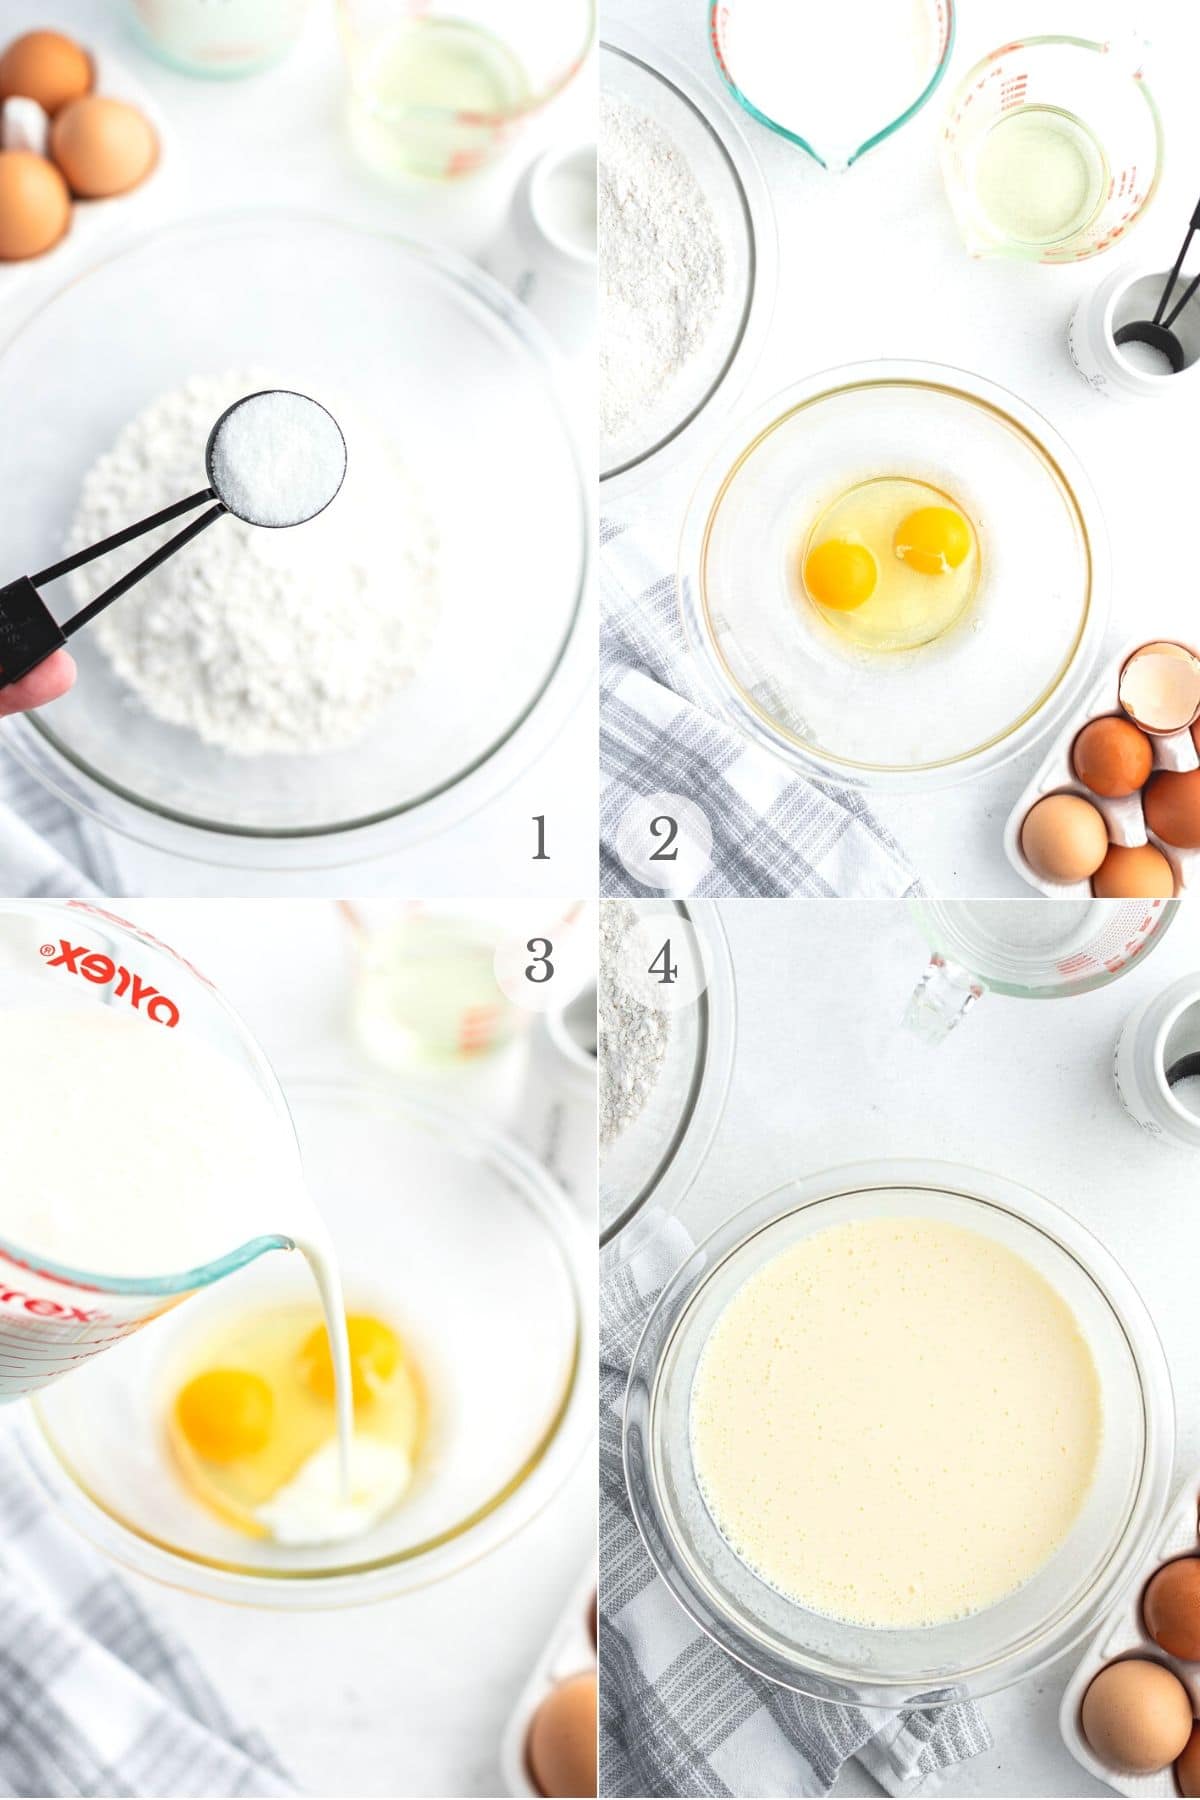 buttermilk pancakes recipe steps 1-4 making the batter